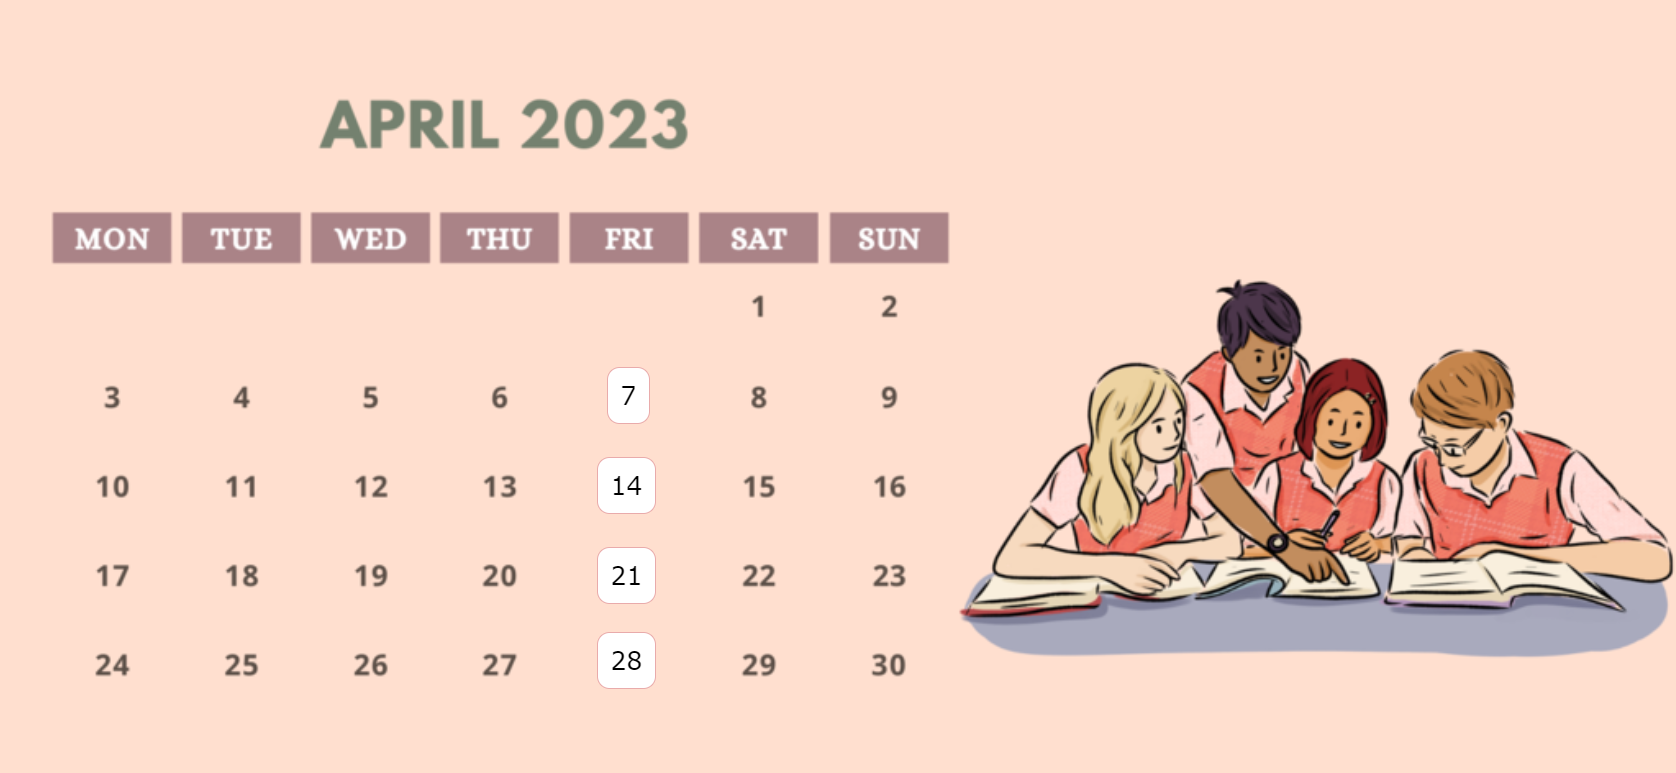 Surprise Calendar Hotspot Image